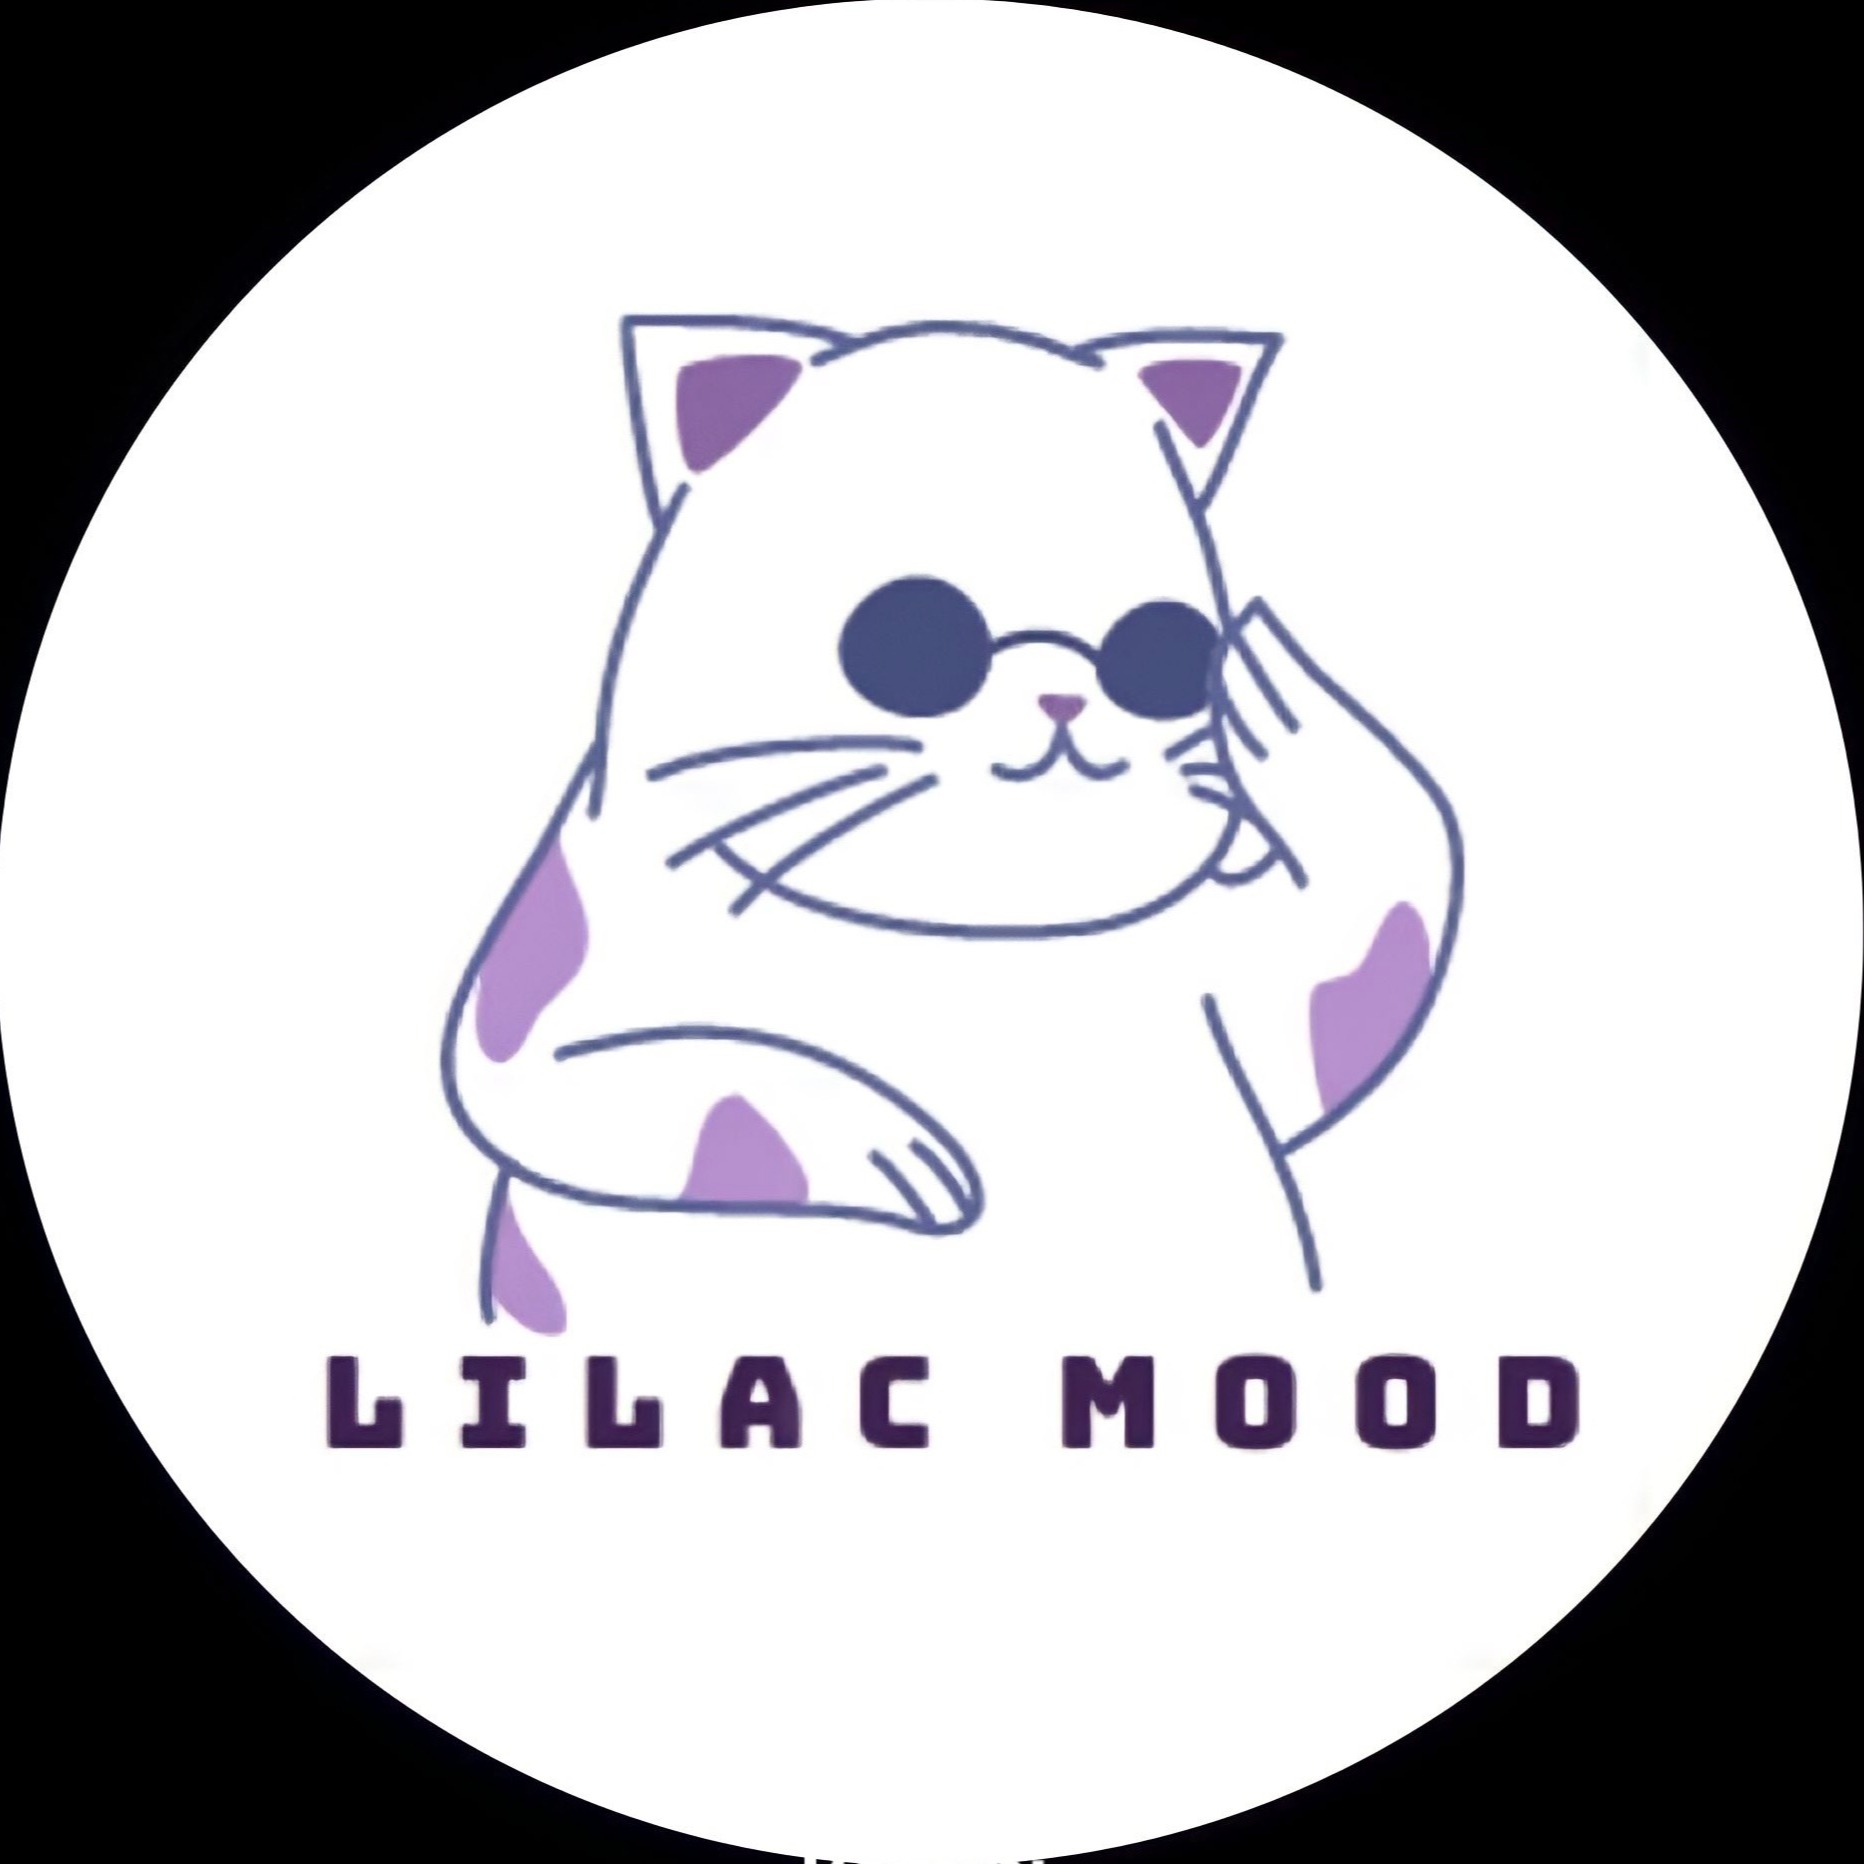 Lilac Mood